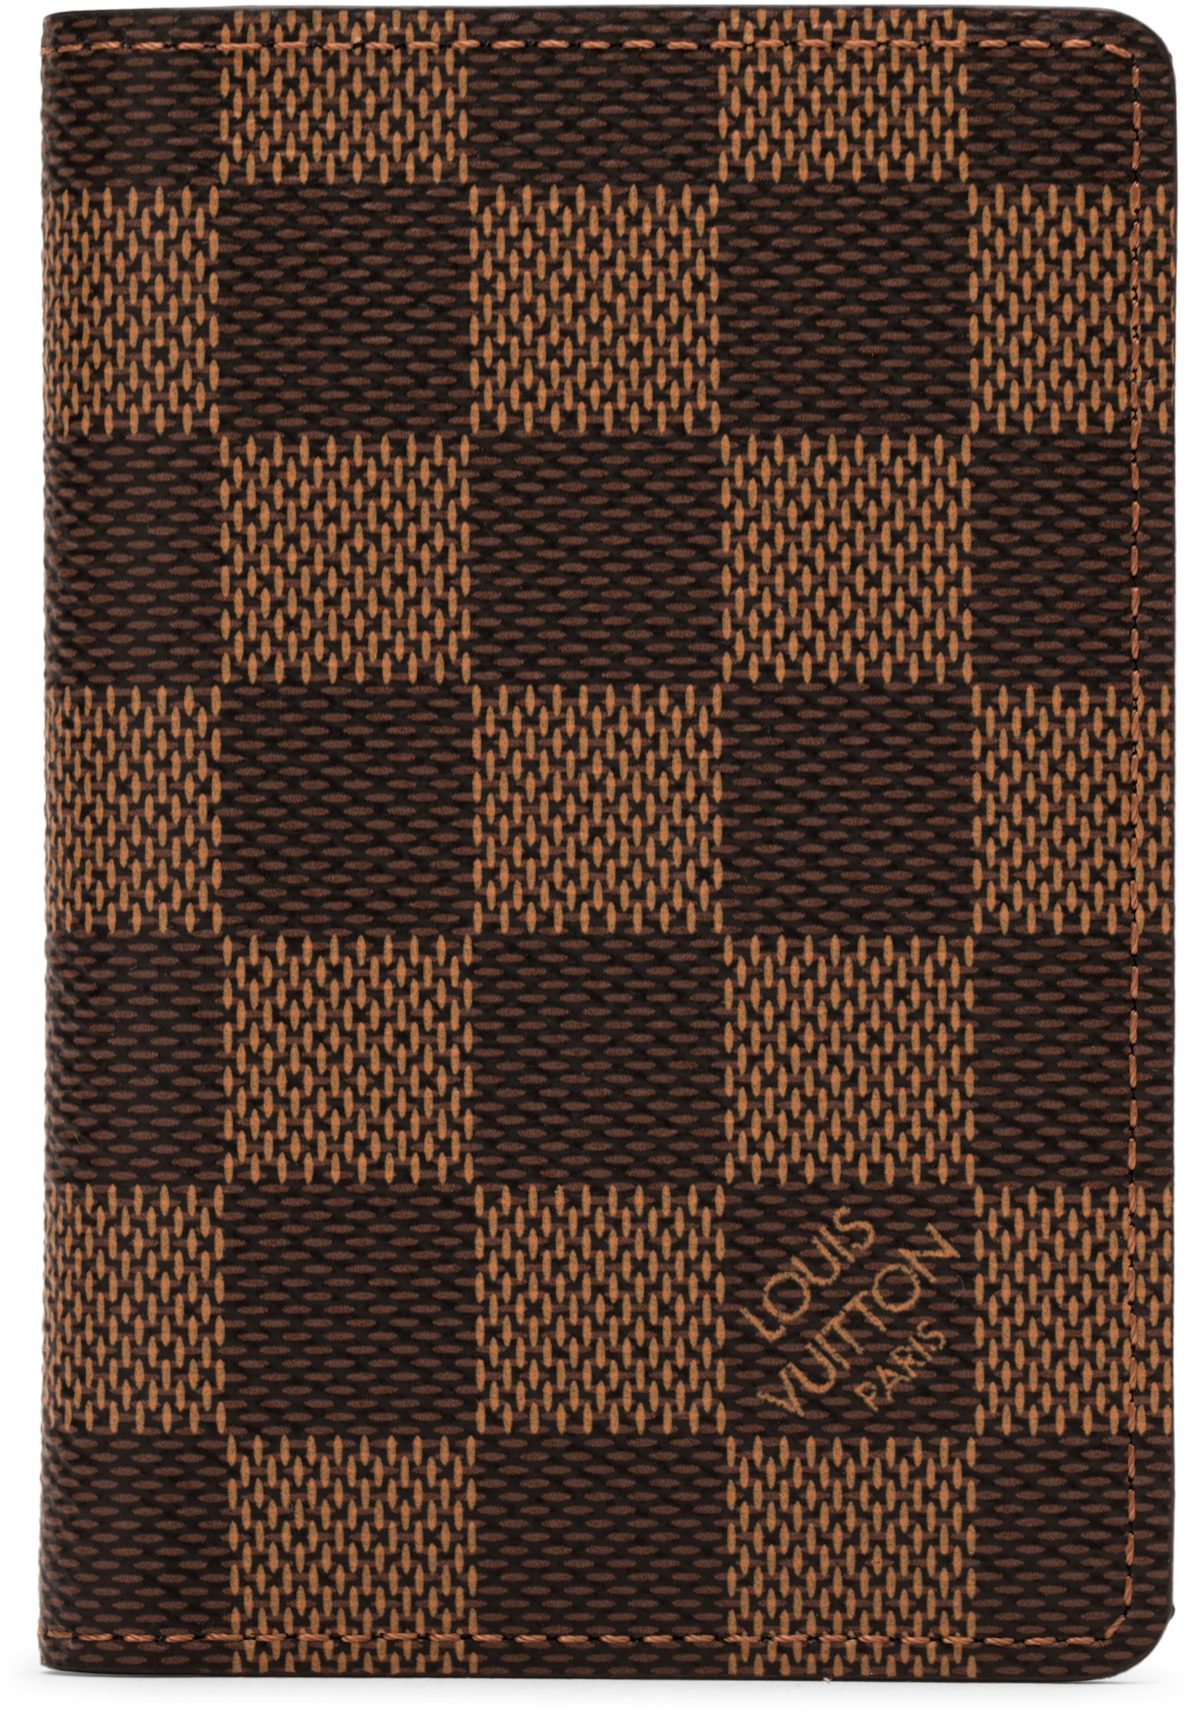 Pocket Organizer Damier Graphite Canvas - Men - Small Leather Goods